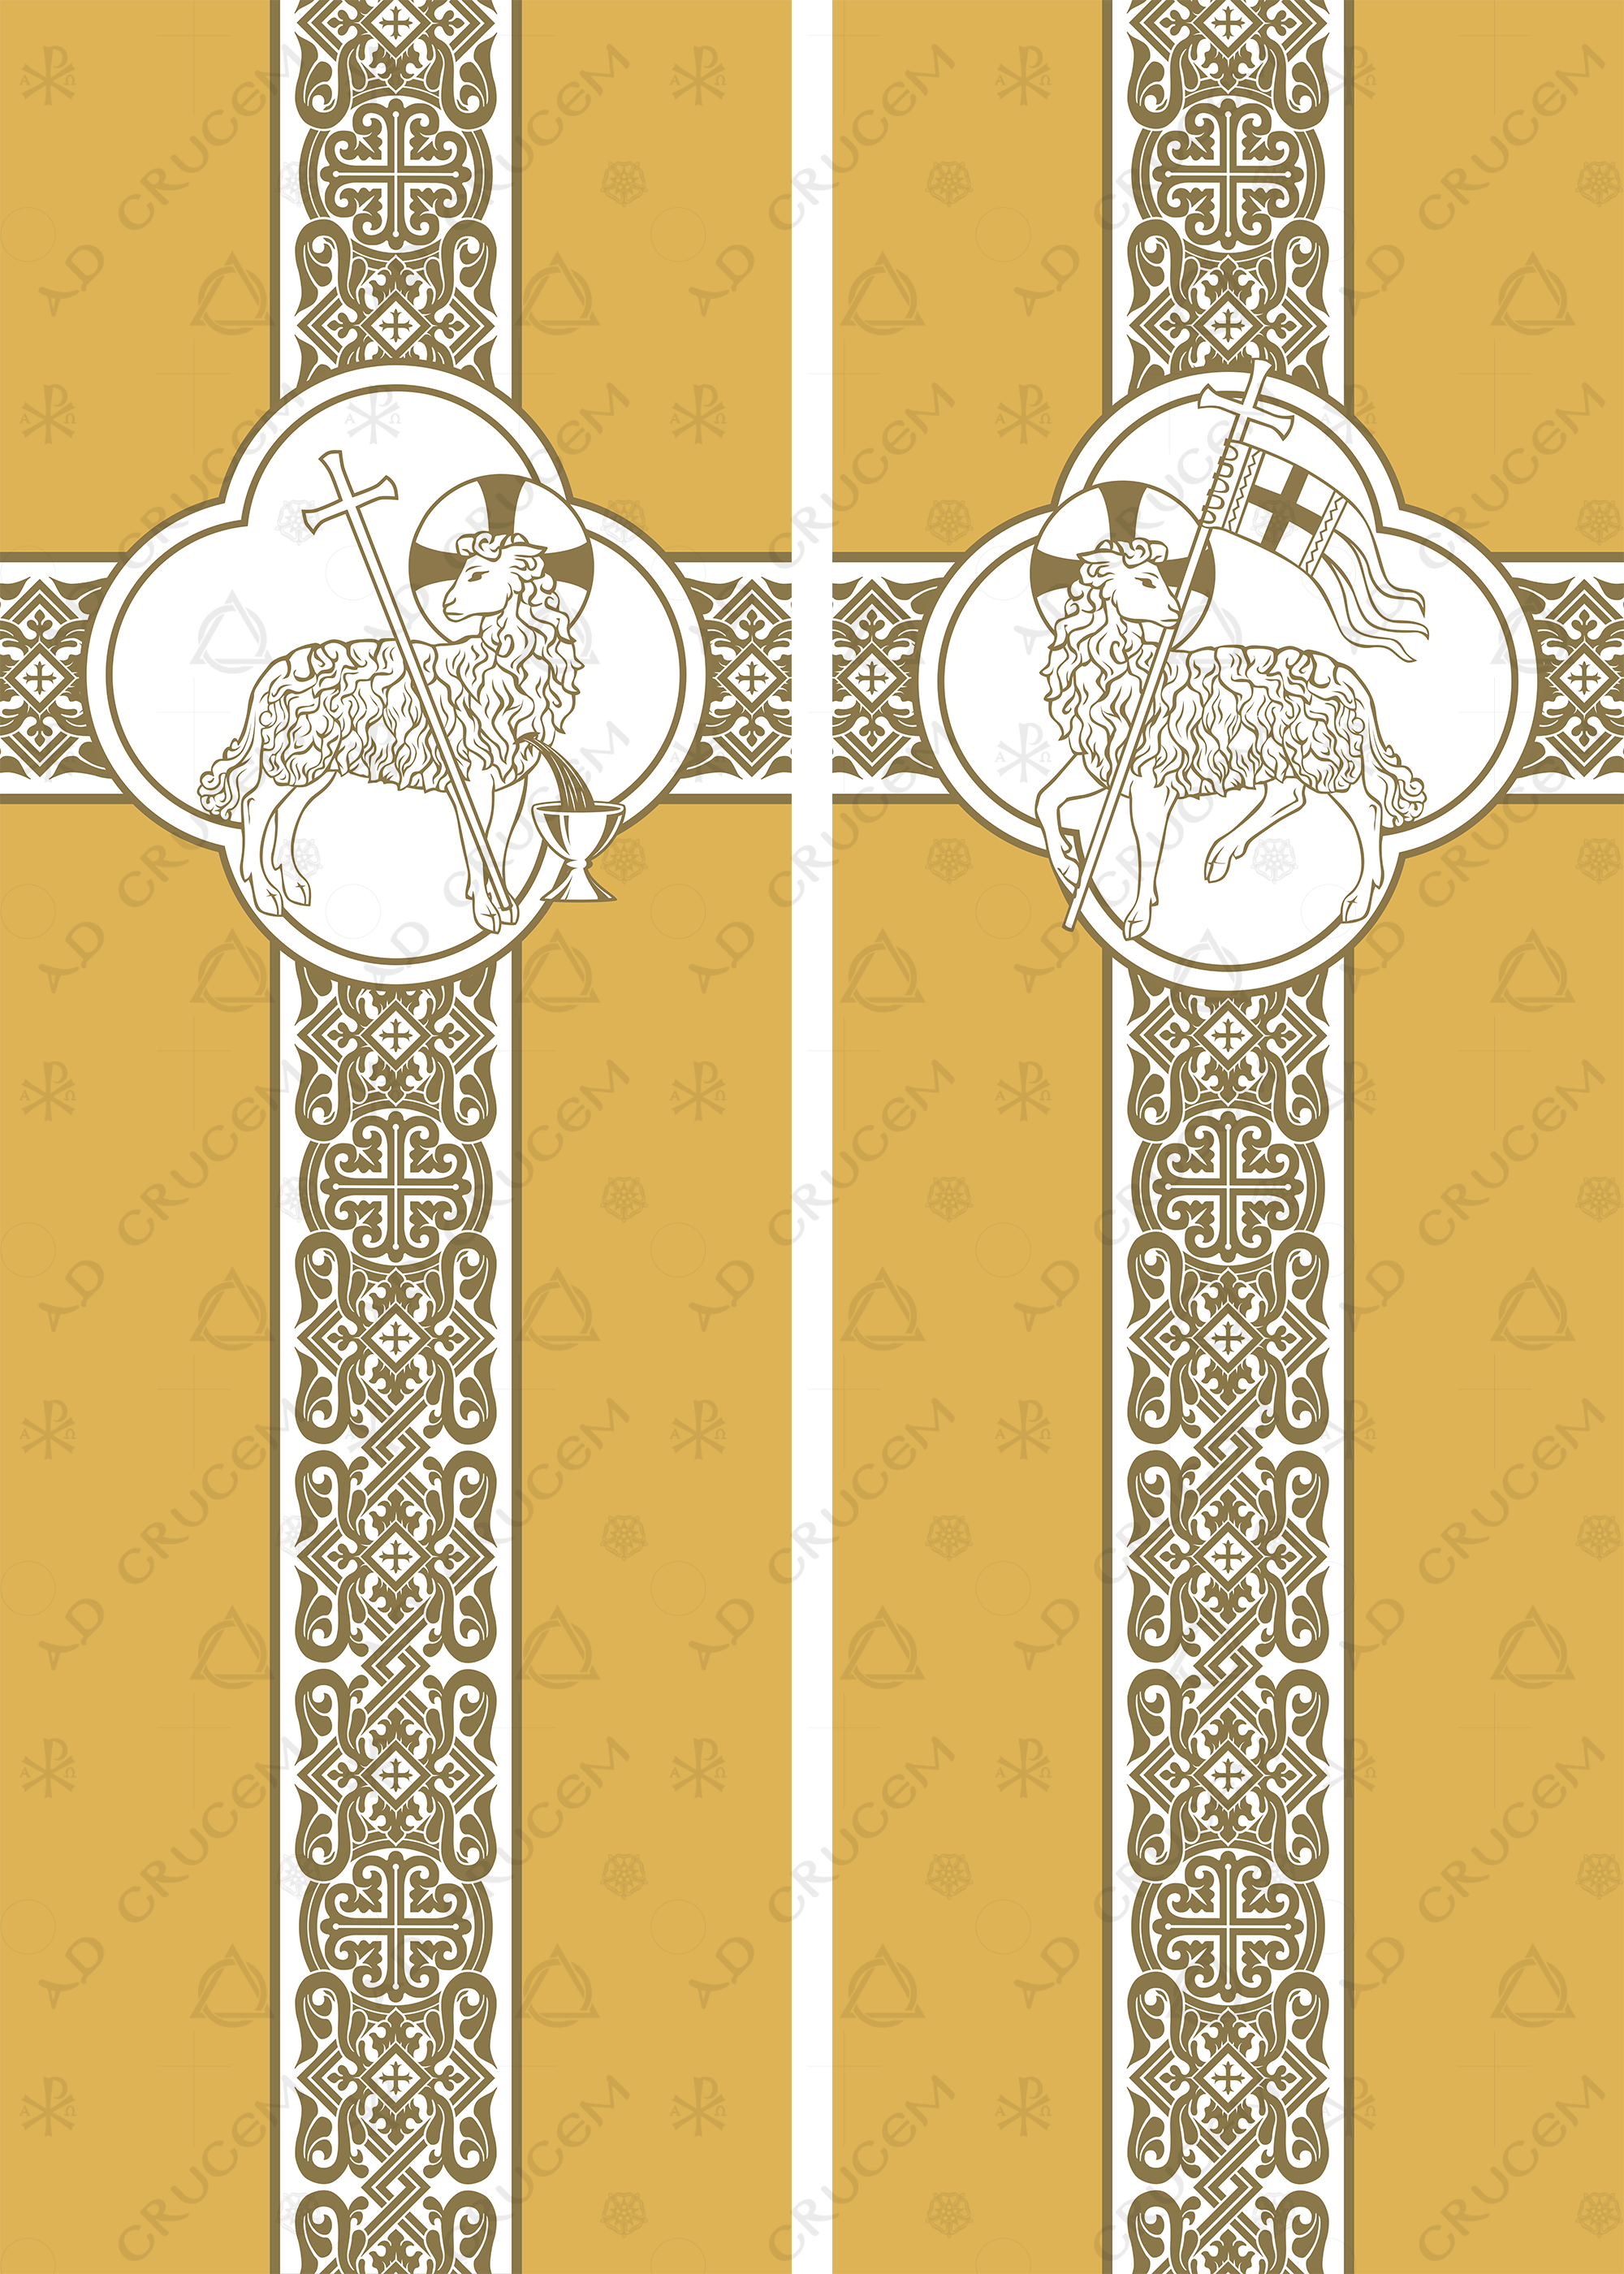 Ad Crucem Festival Banner Set in White and Gold -  Agnus Dei Slain and Agnus Dei Victorious